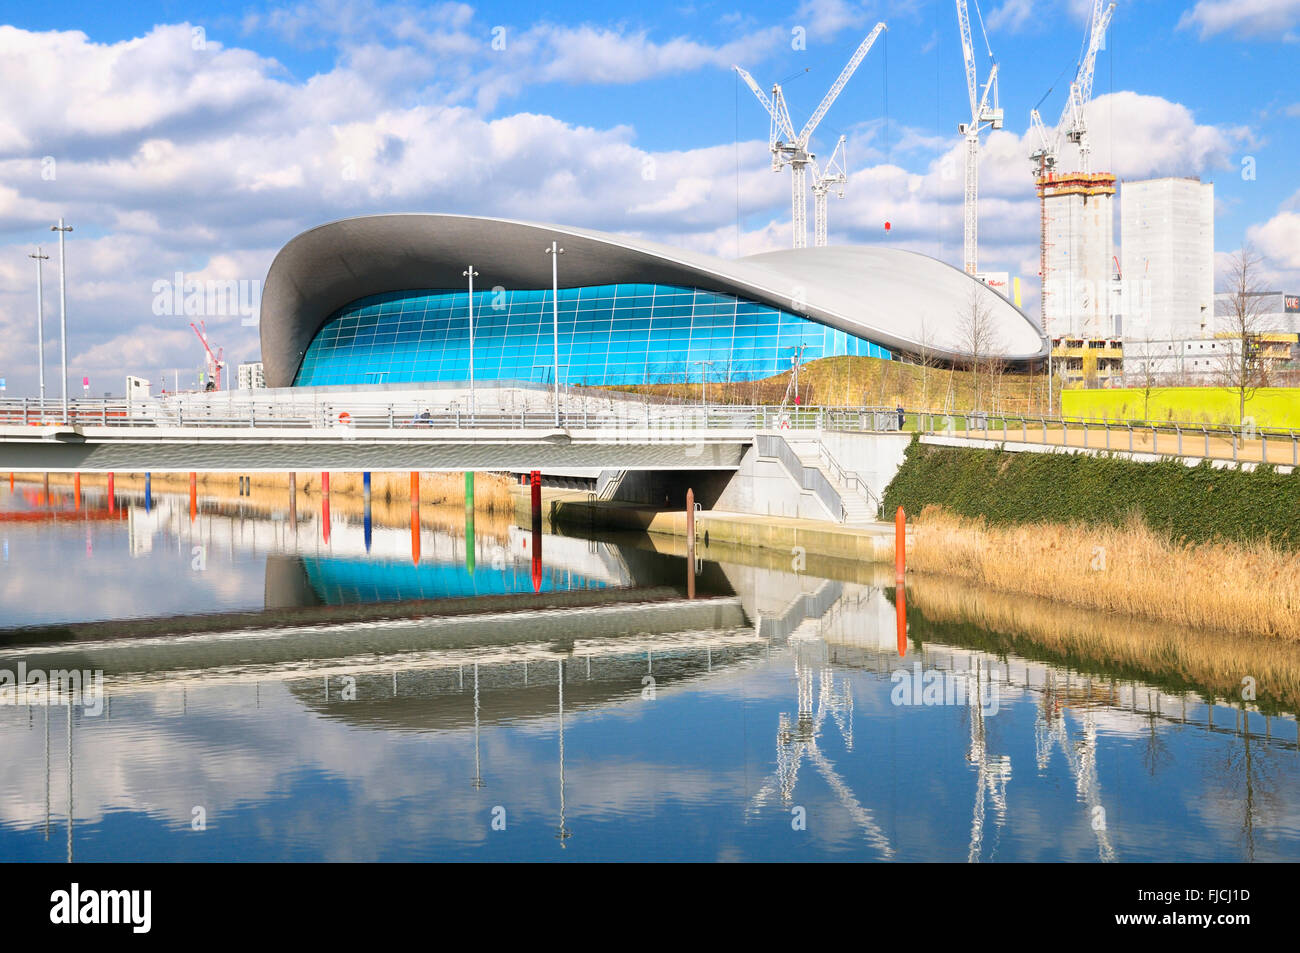 Centre aquatique de Londres conçu par Zaha Hadid dans le Queen Elizabeth Olympic Park, Stratford, East London, UK Banque D'Images